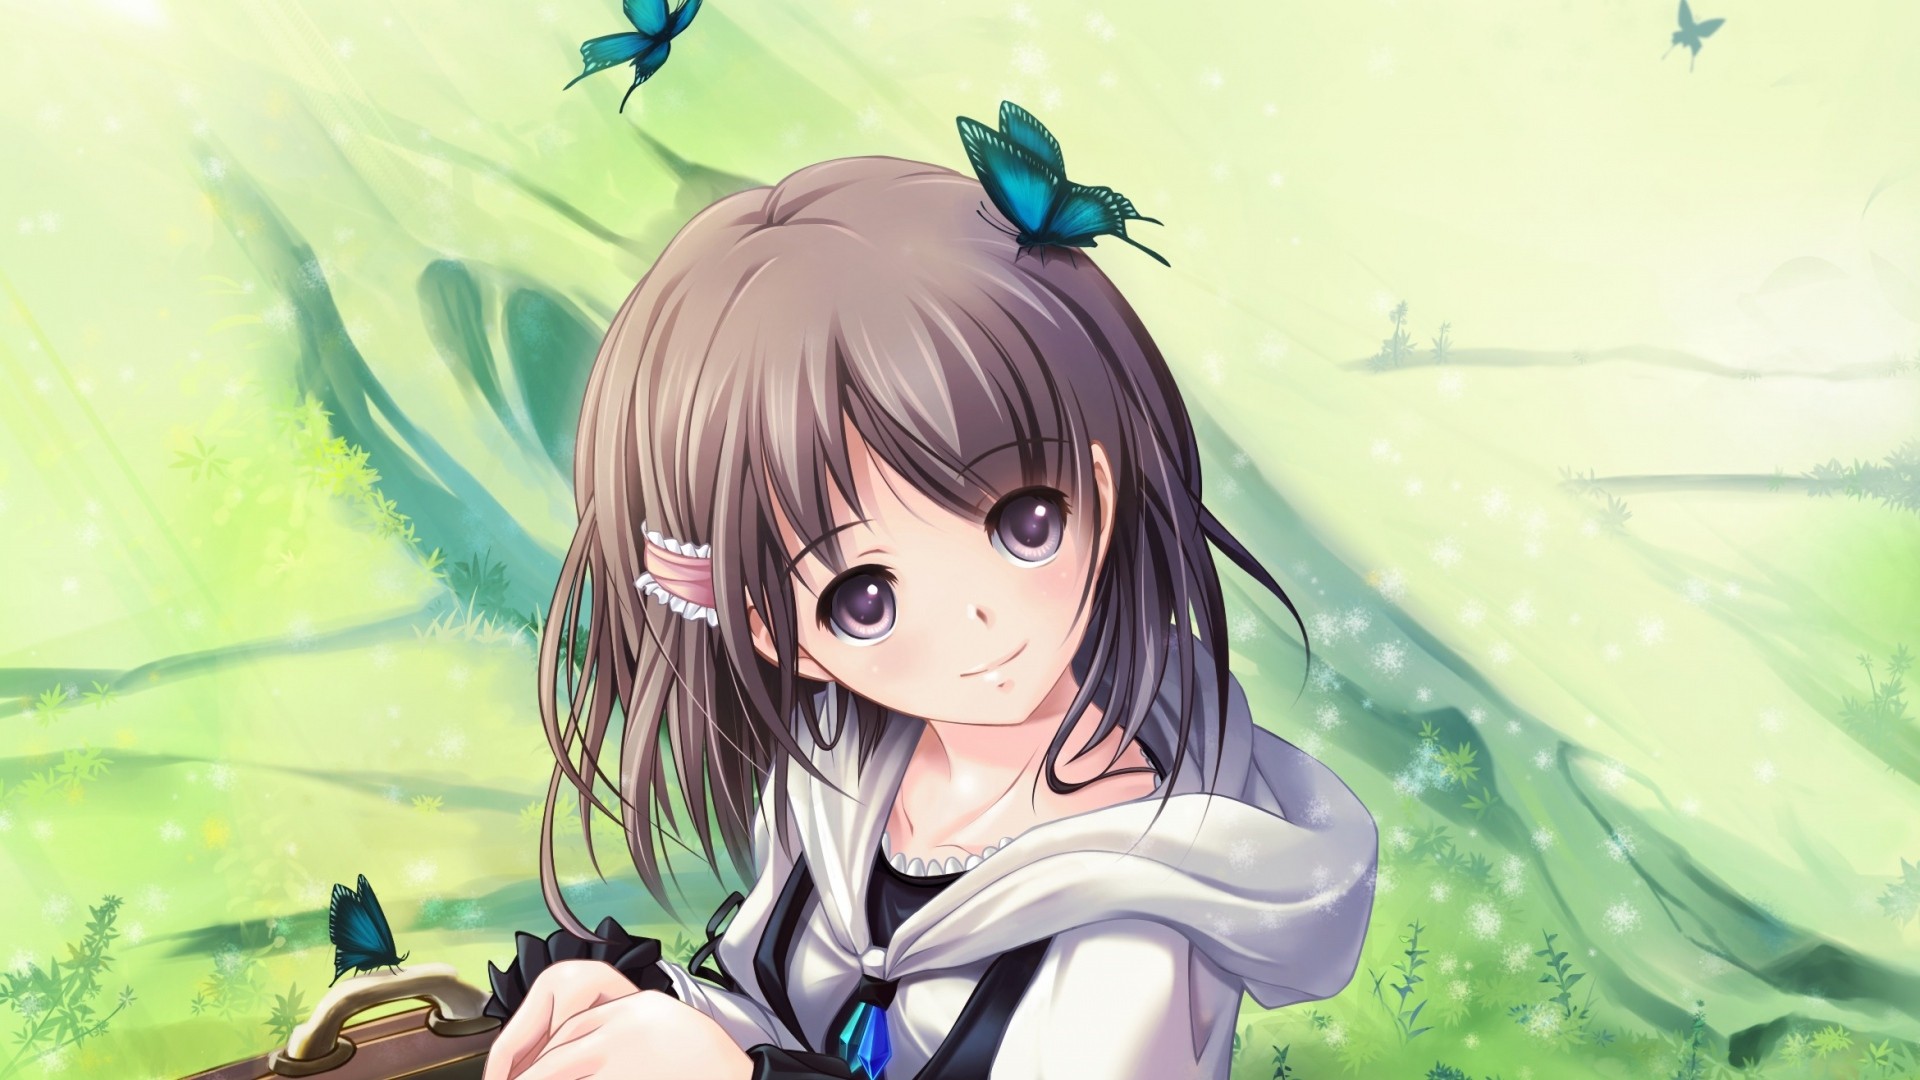 Cute Anime Girl Wallpaper image hd